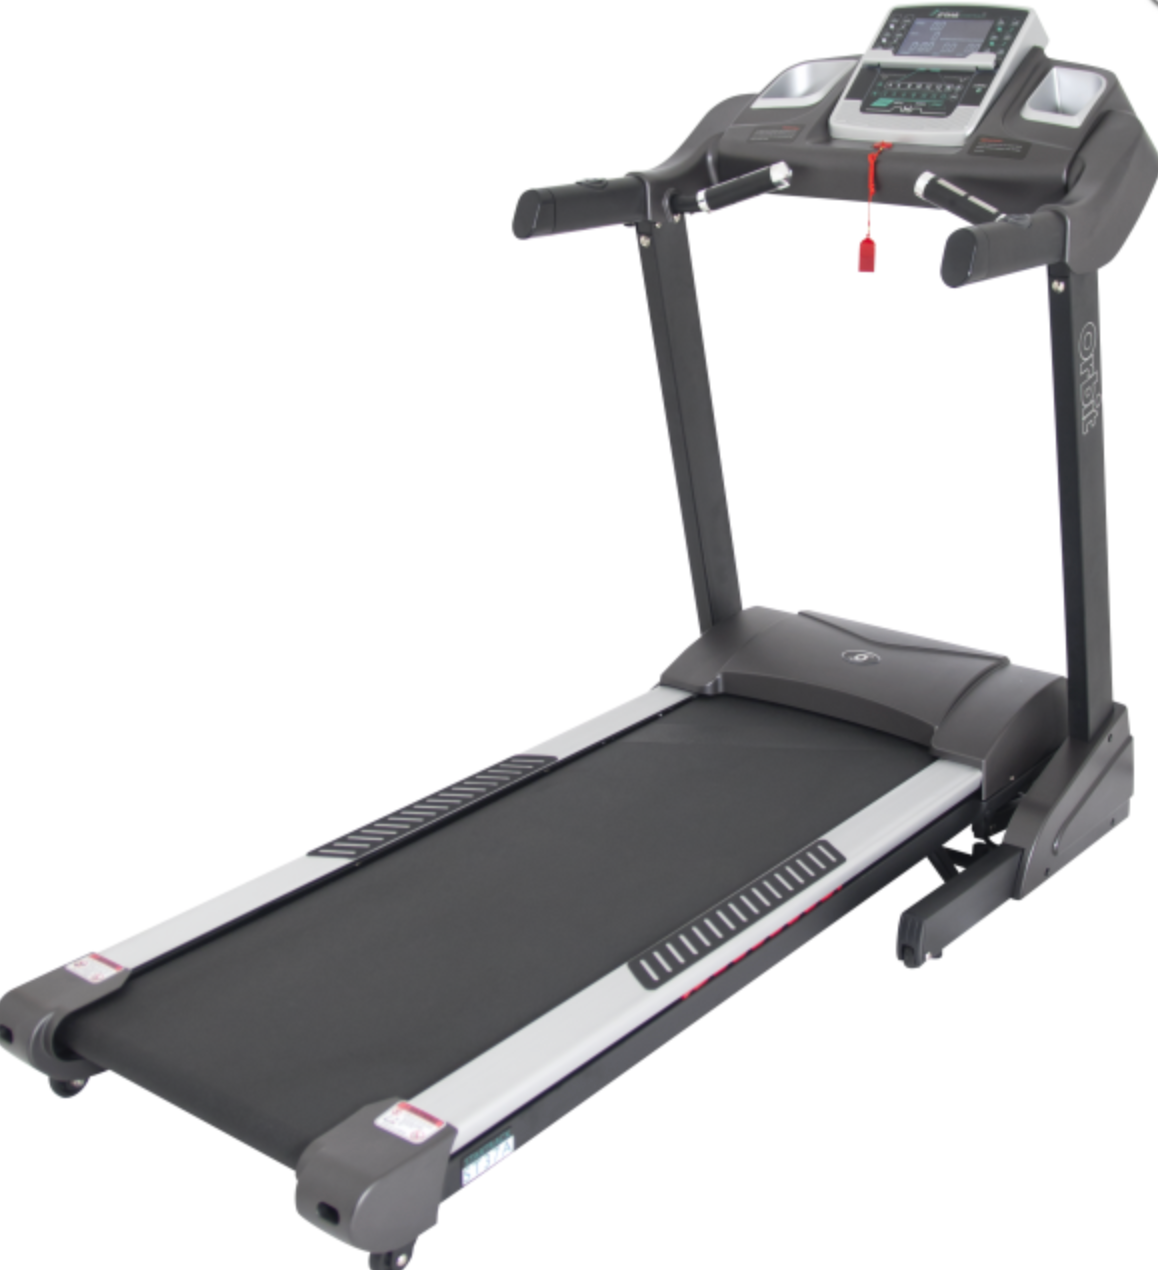 StarTrack Treadmill - 1.5 HP - Fitness Hero Brand new